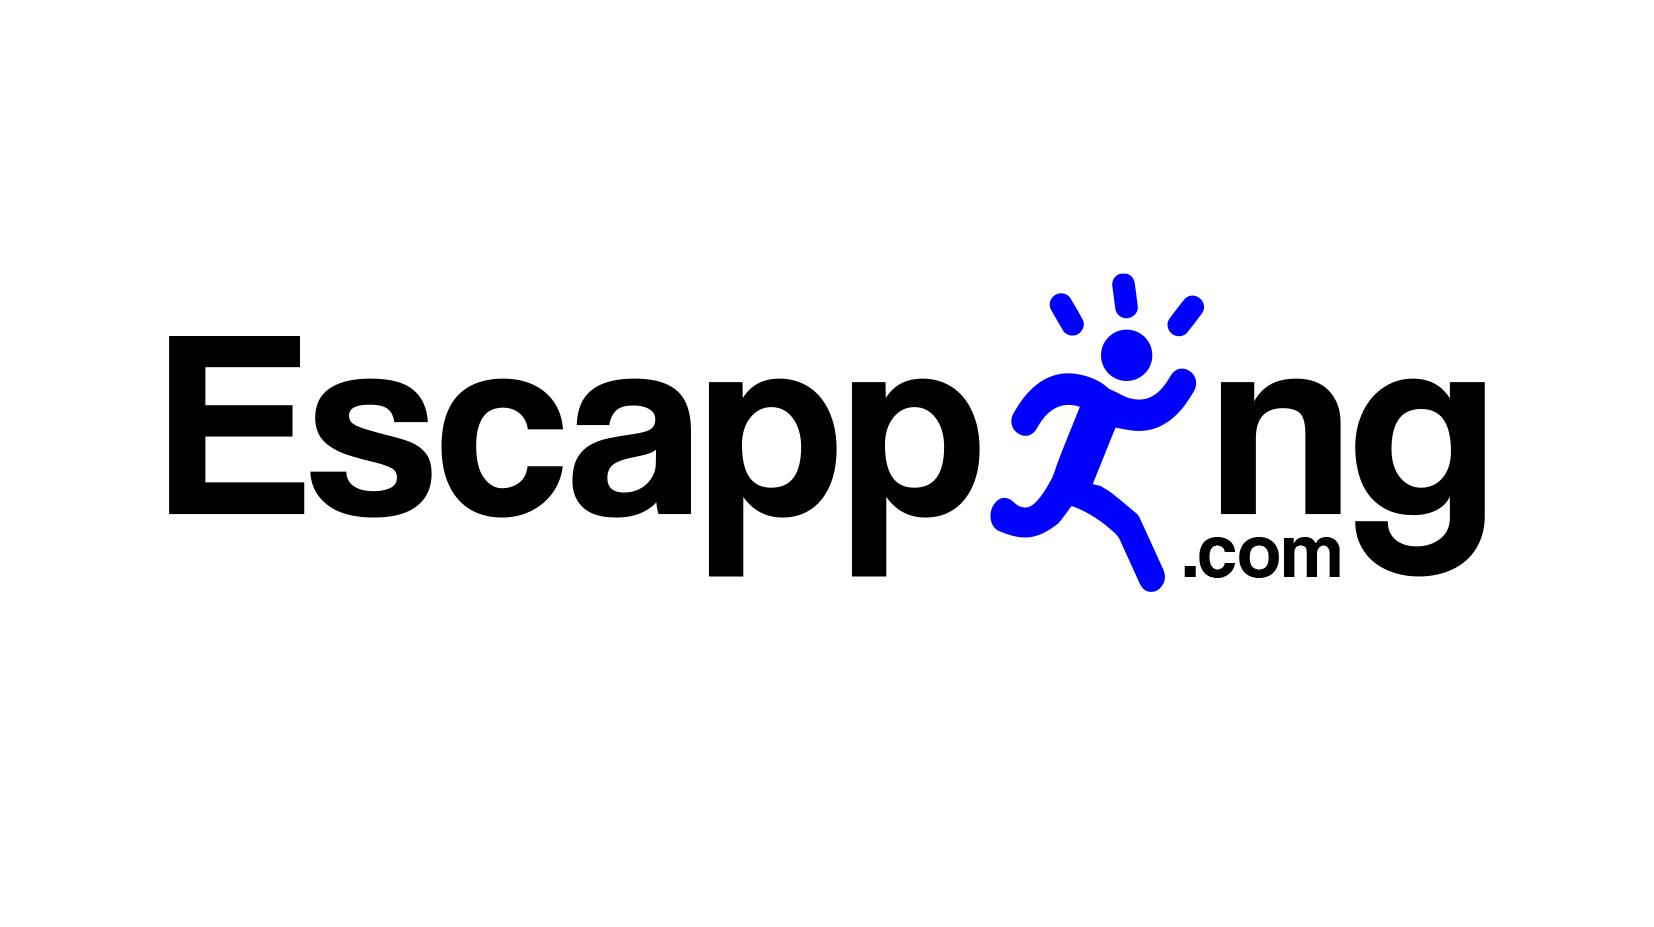 ‘Escapping’ Logotype design